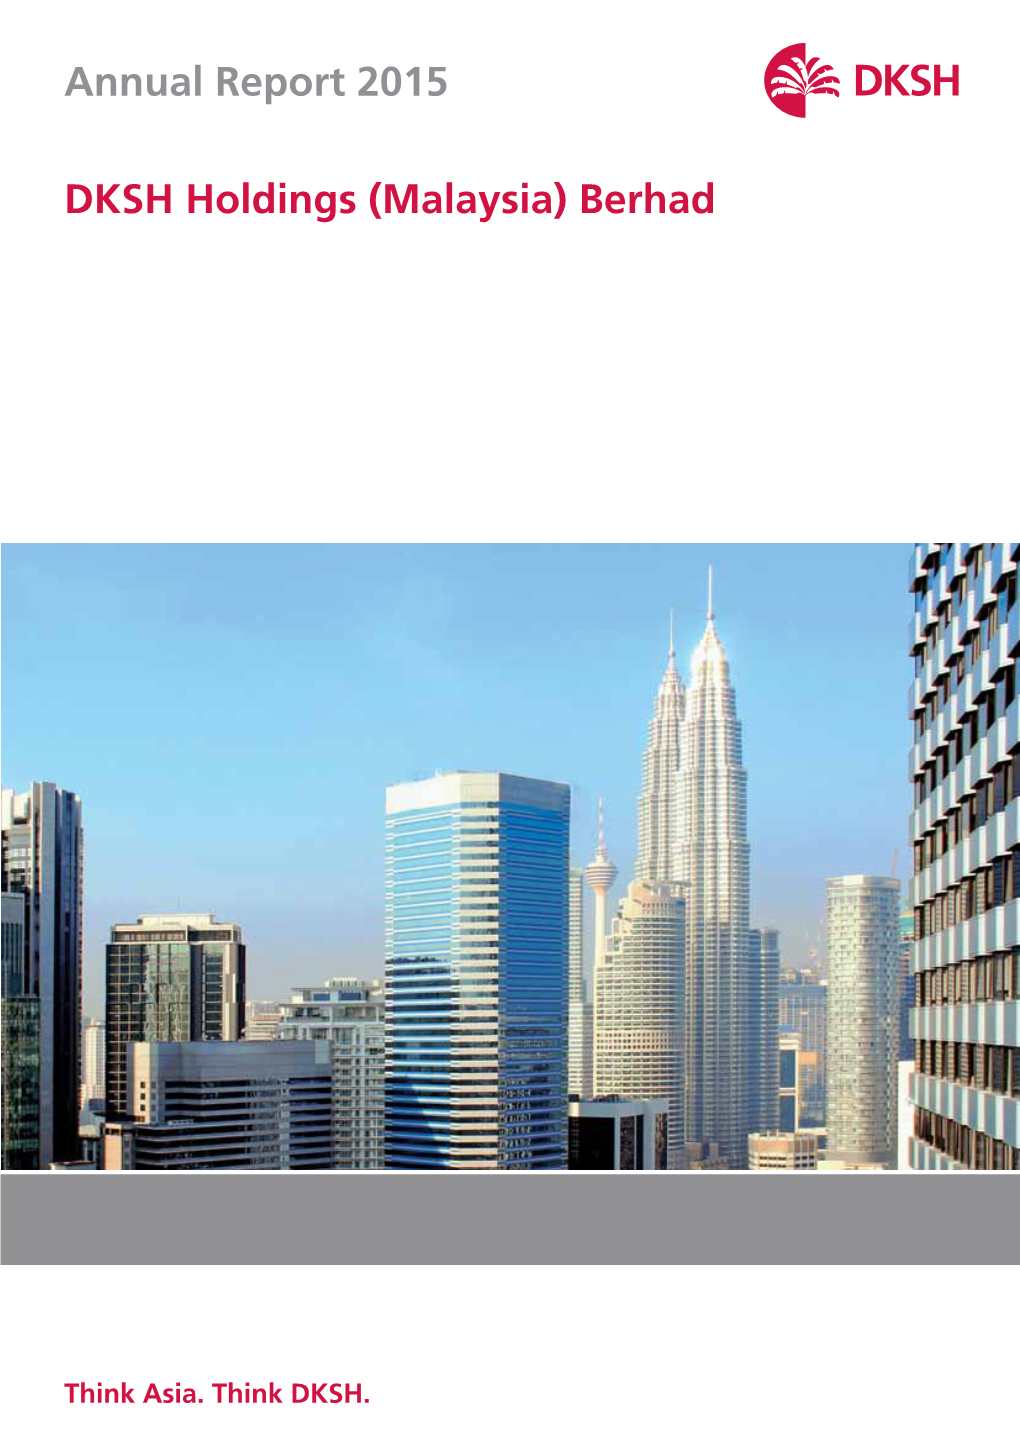 Annual Report 2015 DKSH Holdings (Malaysia) Berhad